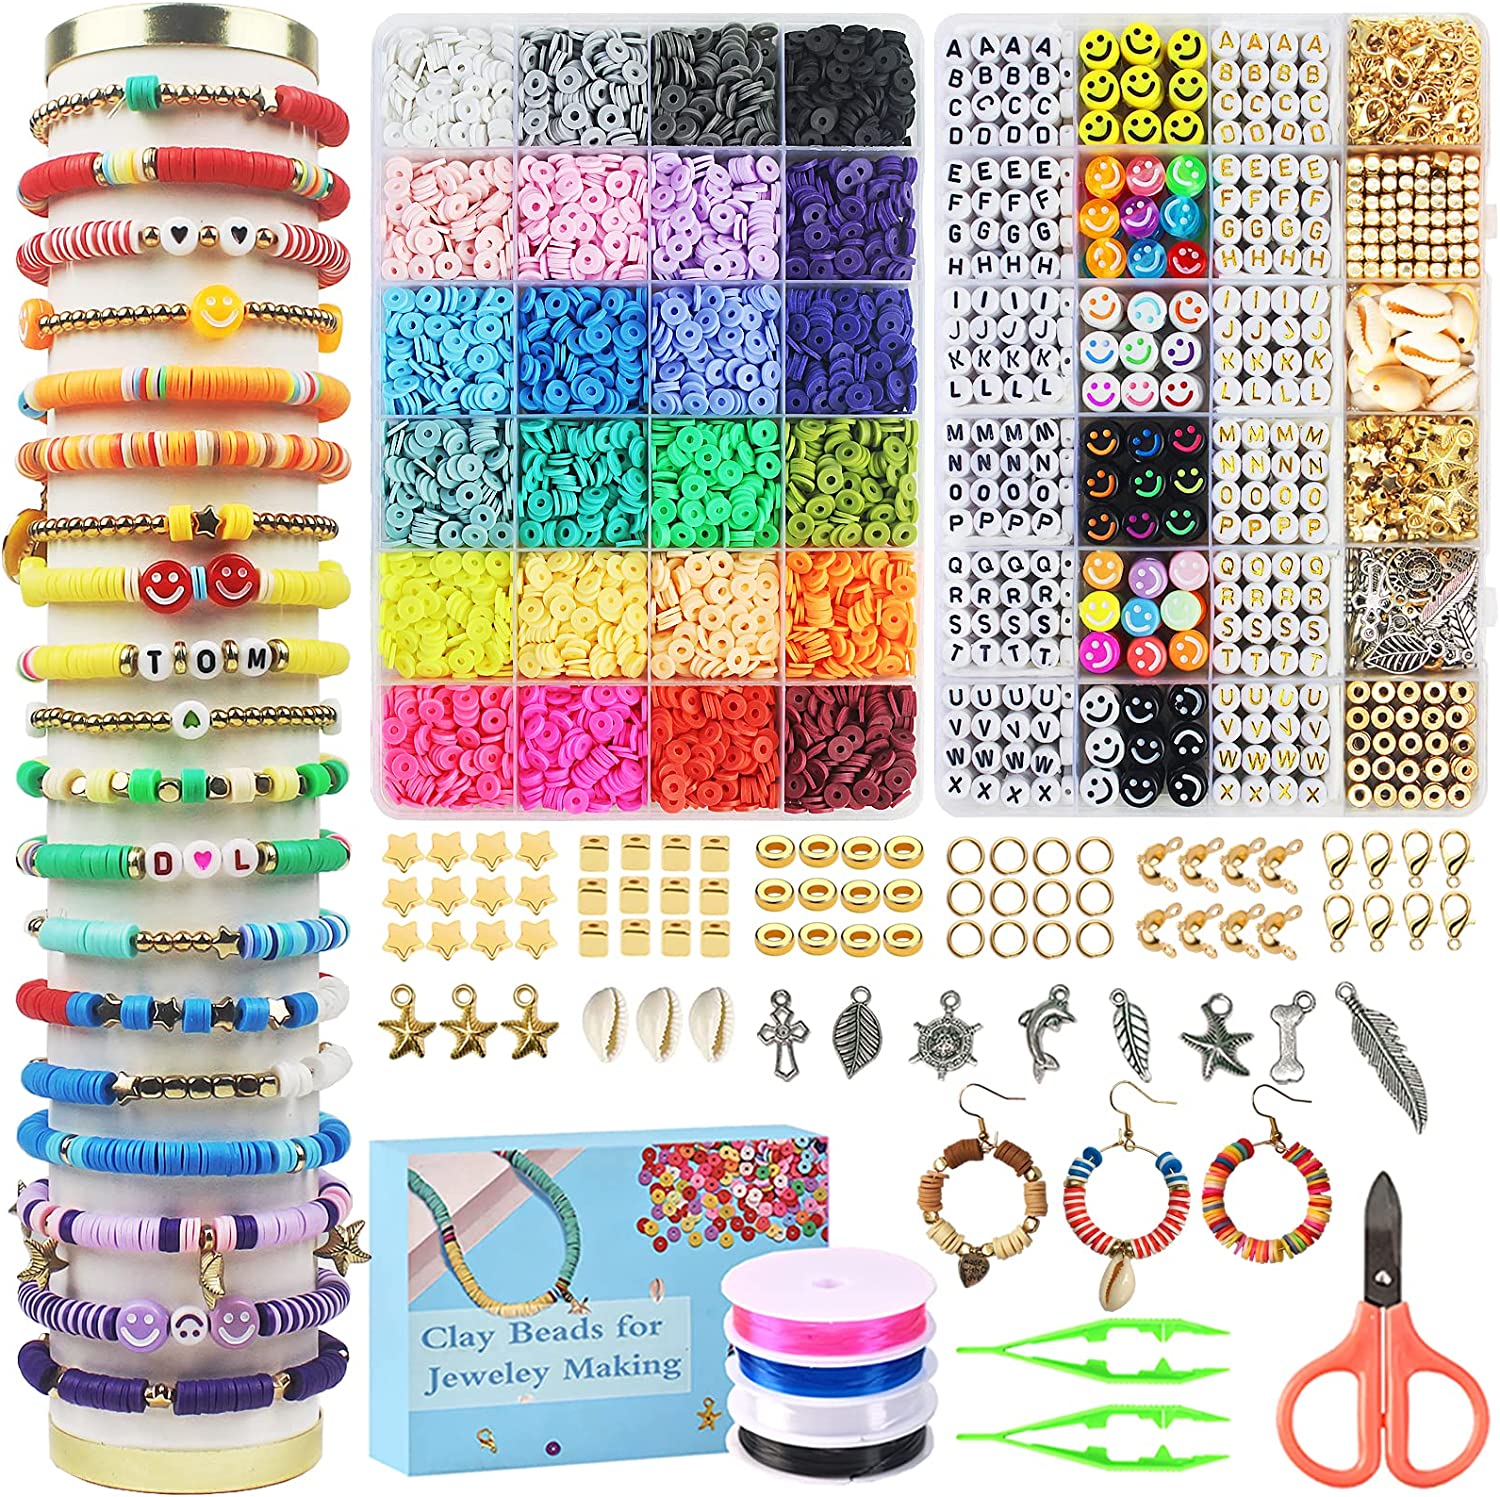 ARTDOT 5342 PCS Clay Beads Friendship Bracelet Making Kit, 24